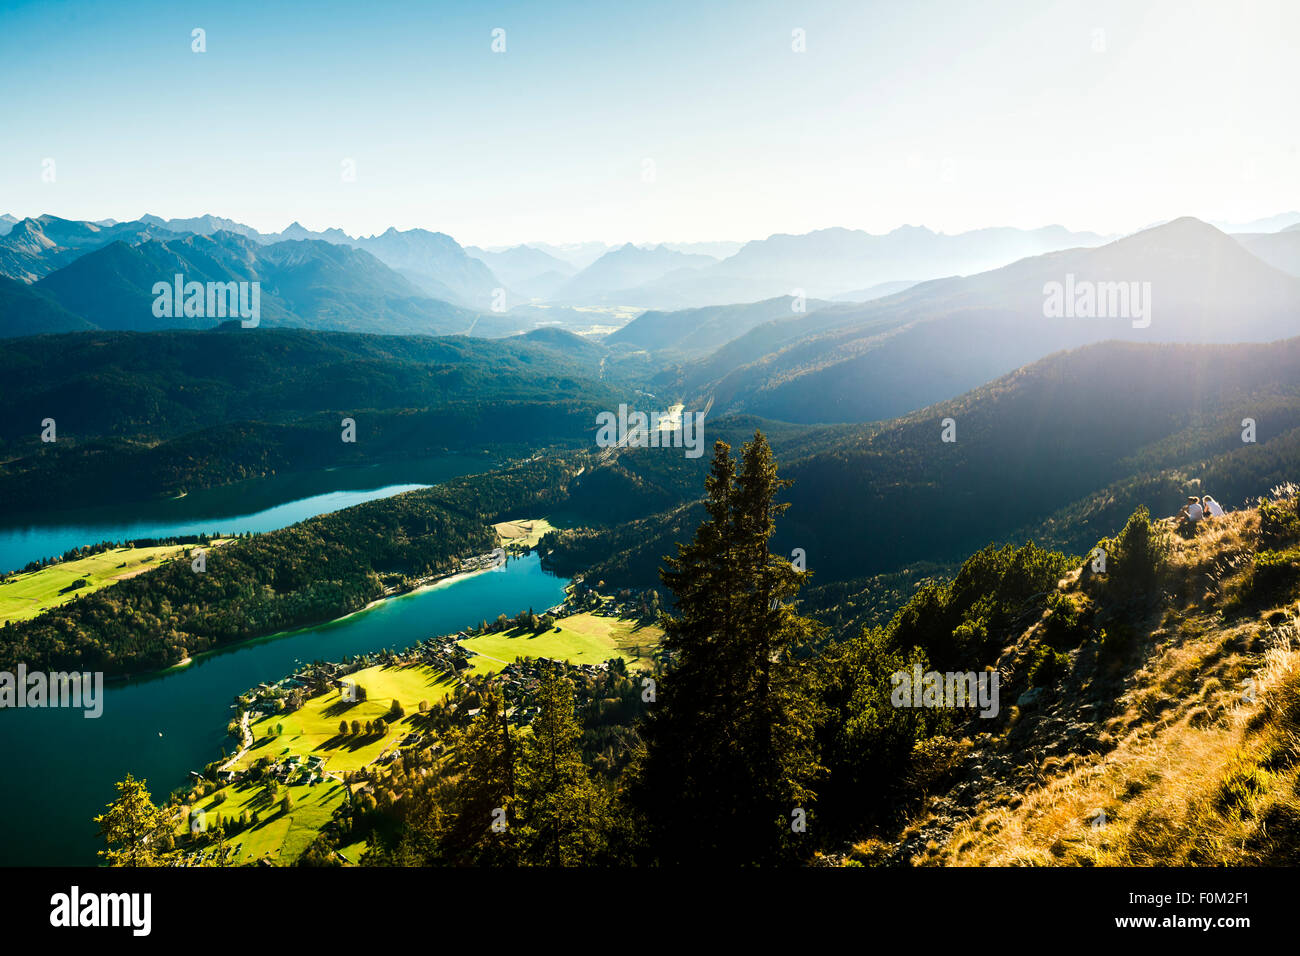 Spain et les montagnes du Karwendel, Bavière, Allemagne Banque D'Images